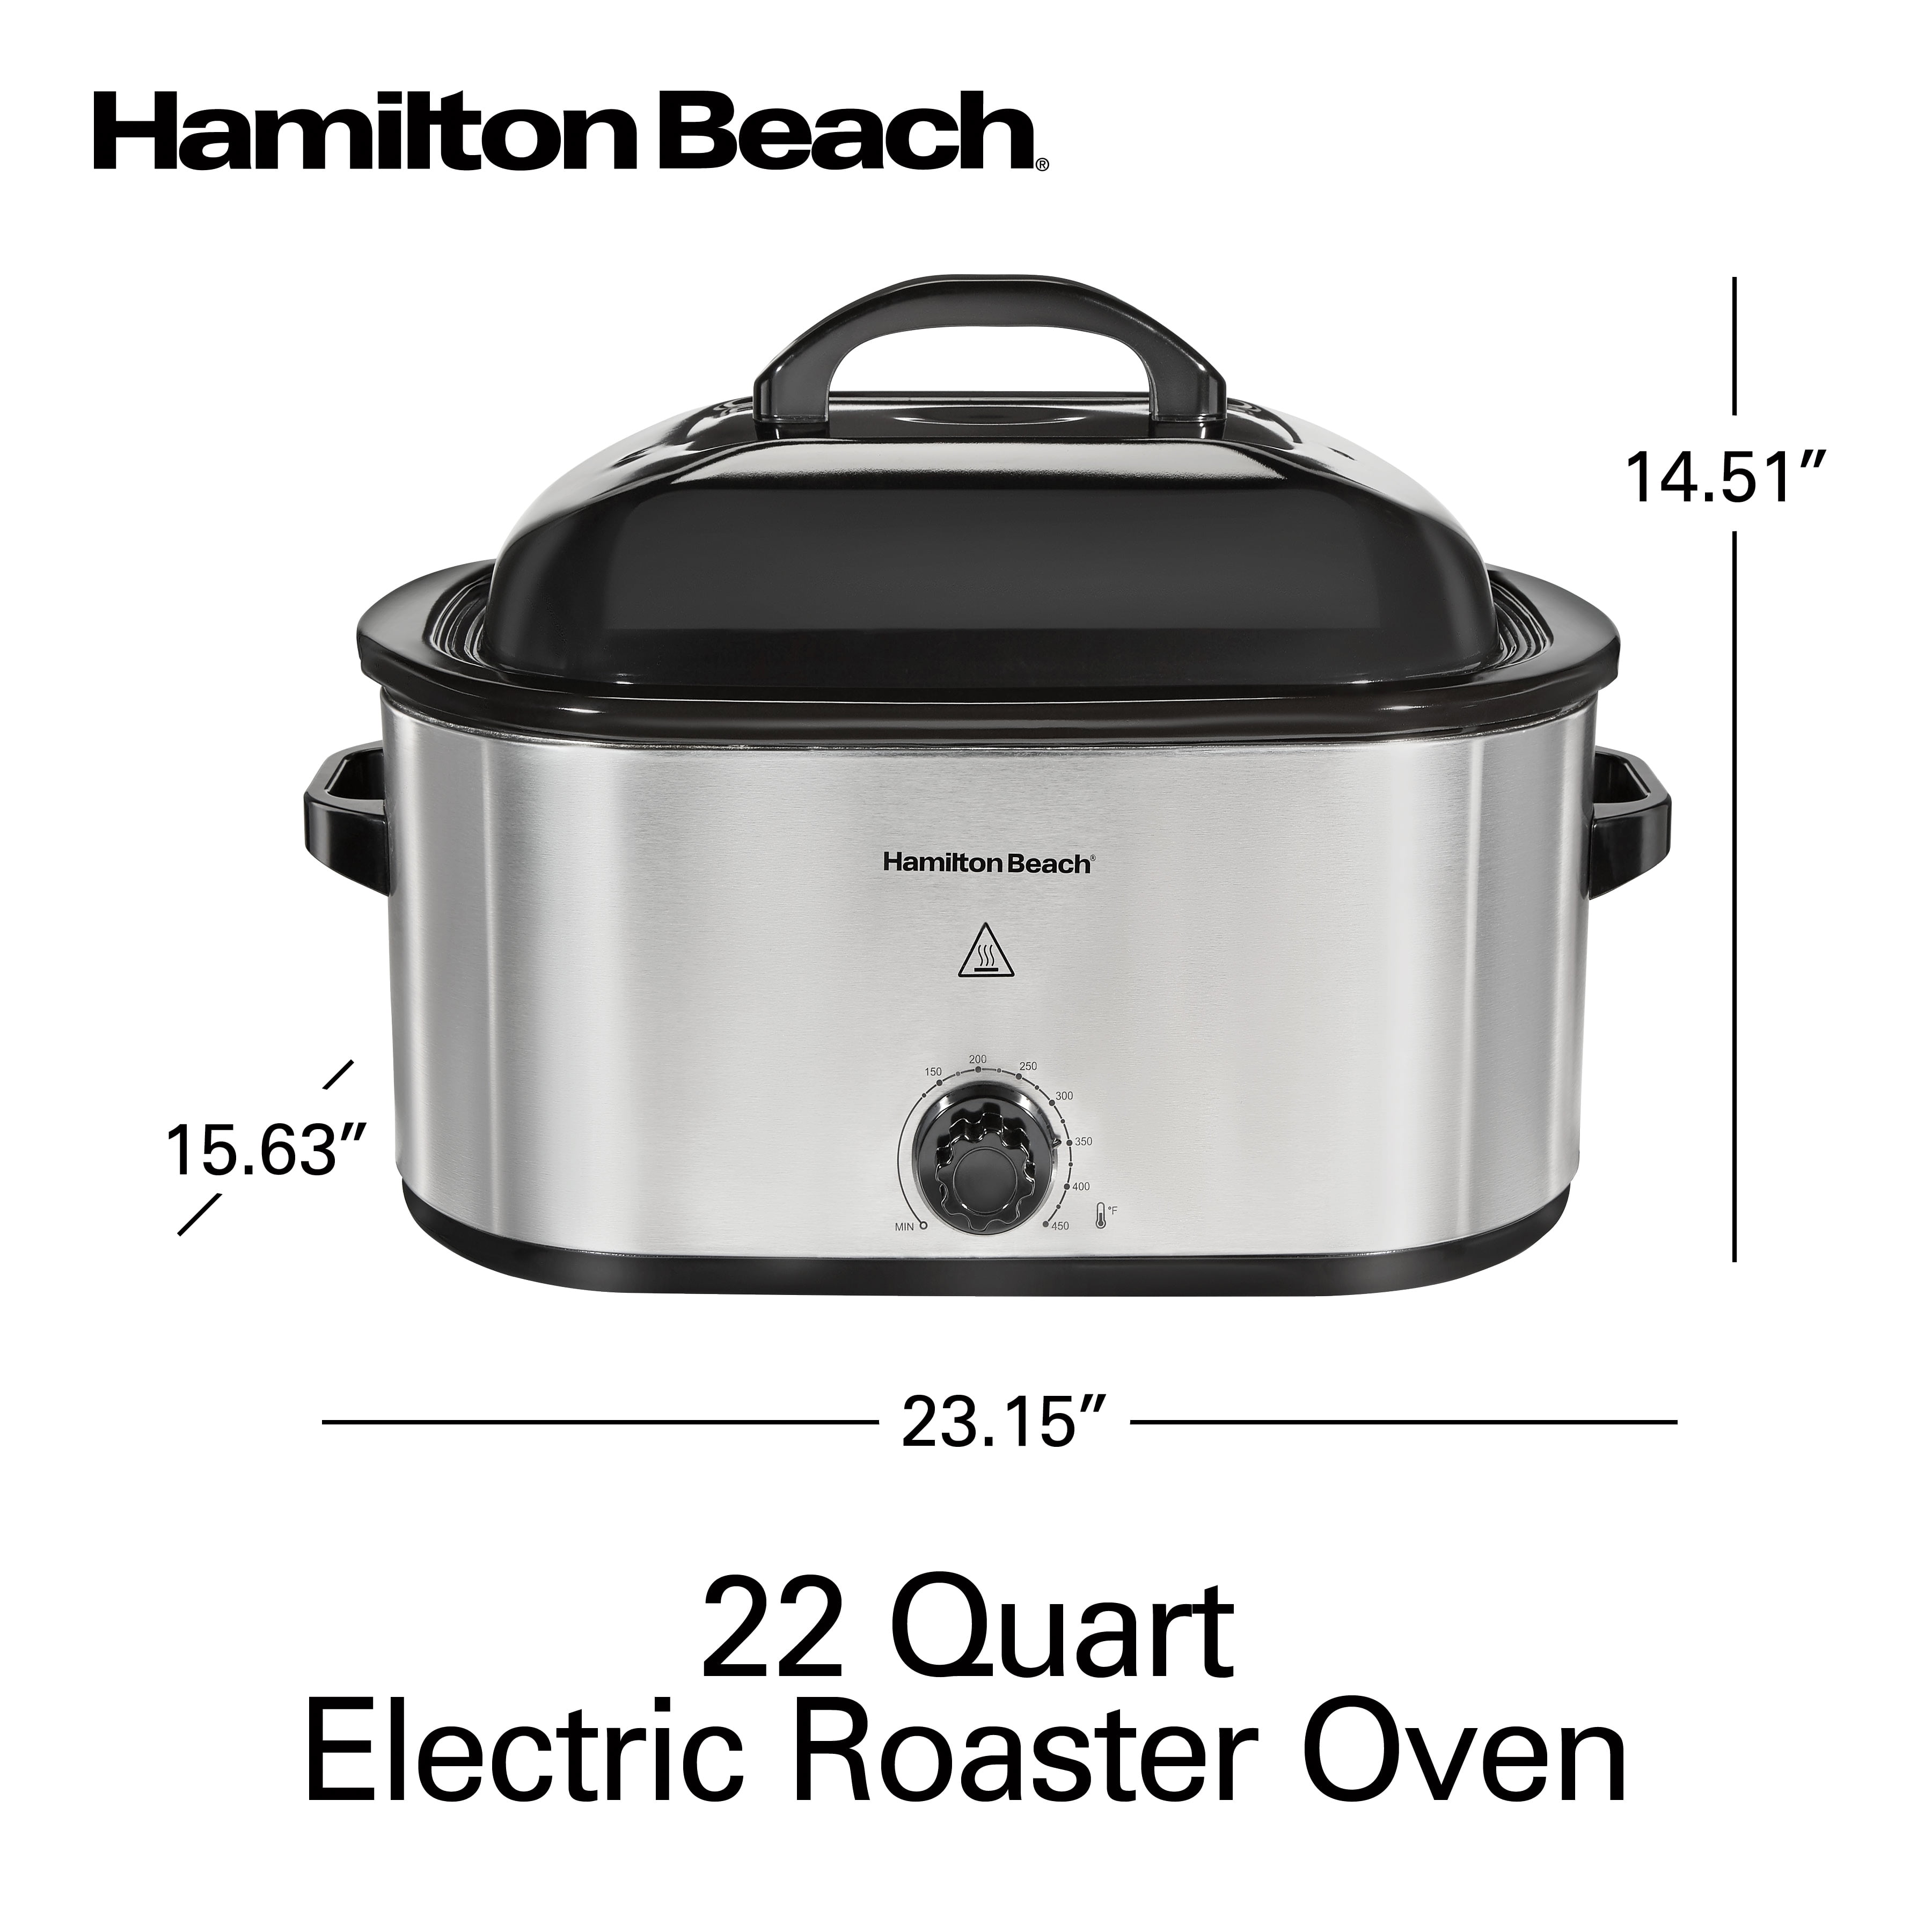 Hamilton Beach 32235 Red Electric 22 Quart Roaster Oven